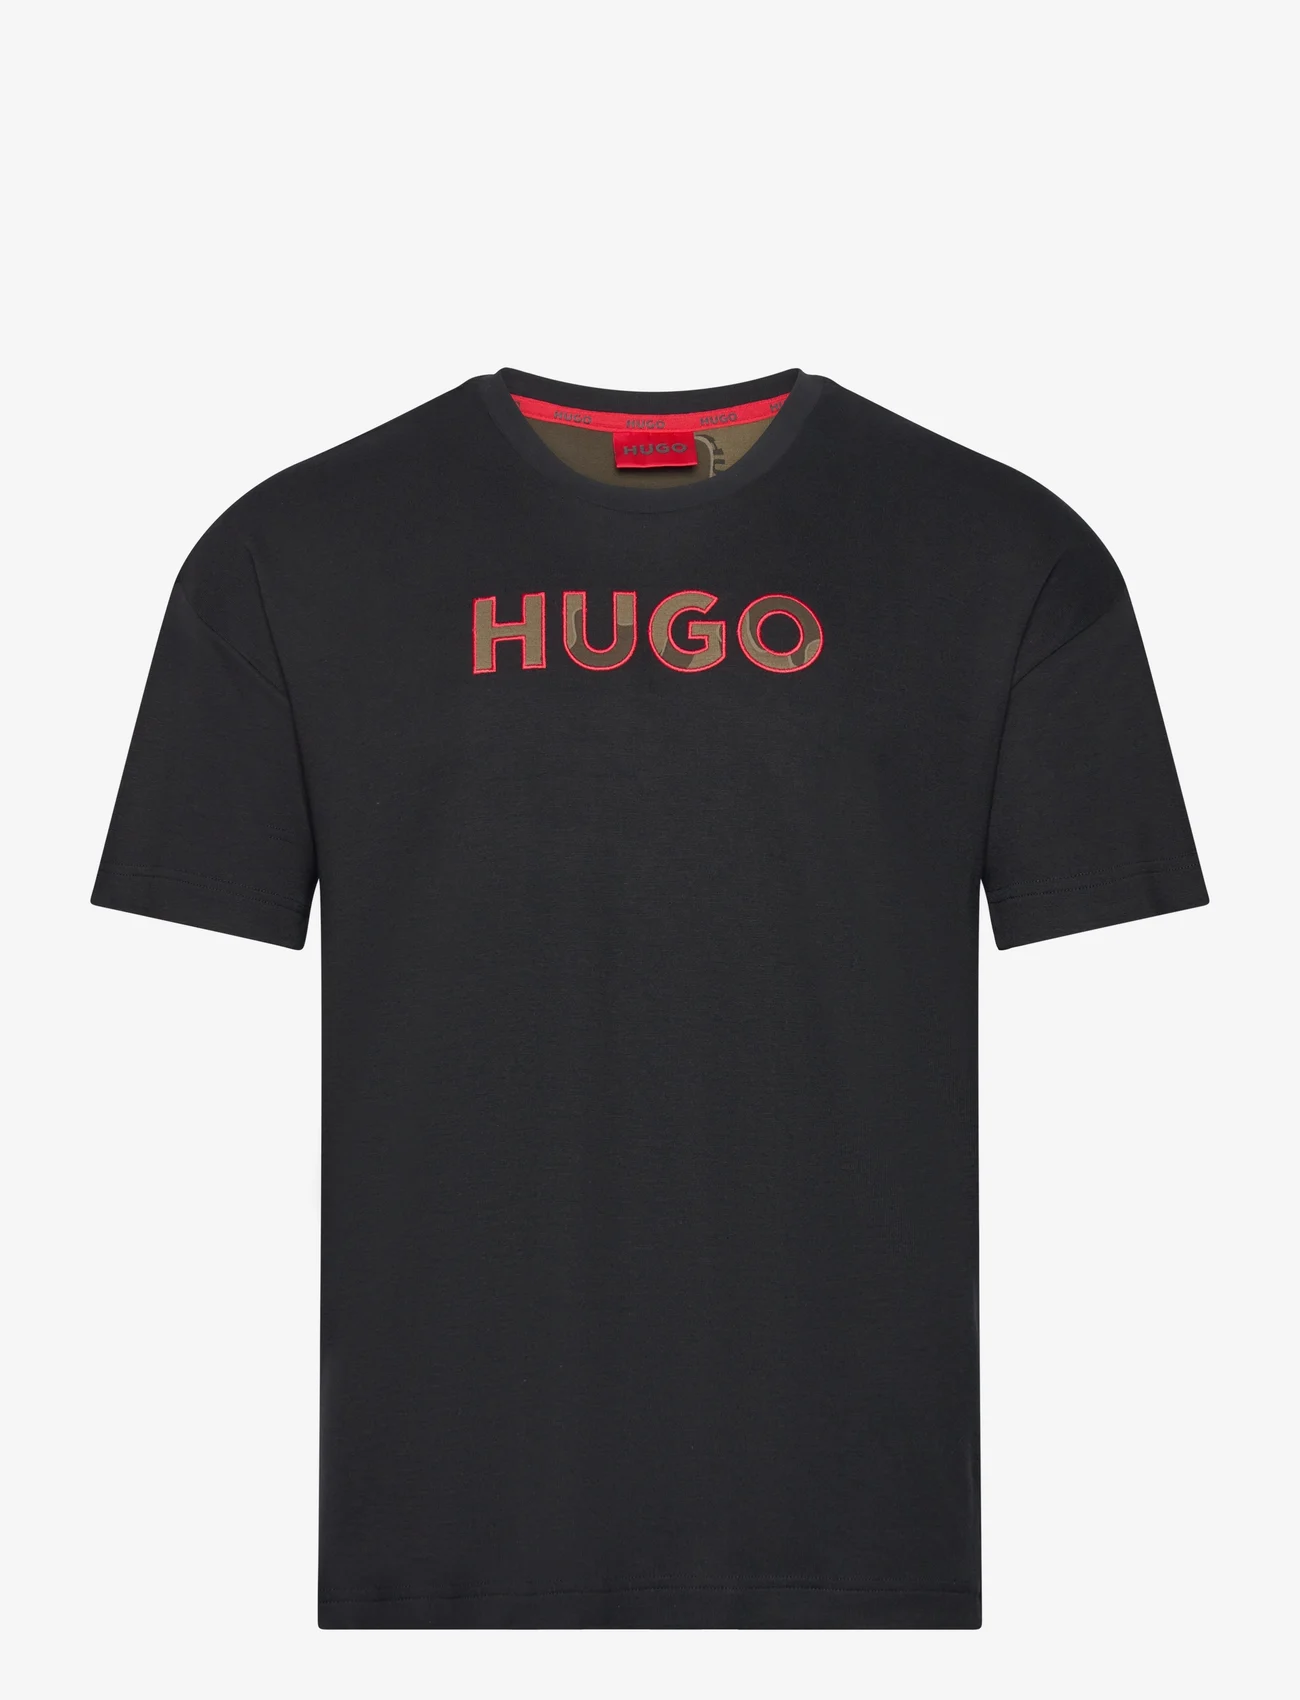 HUGO - Camo T-Shirt - kurzärmelige - black - 0